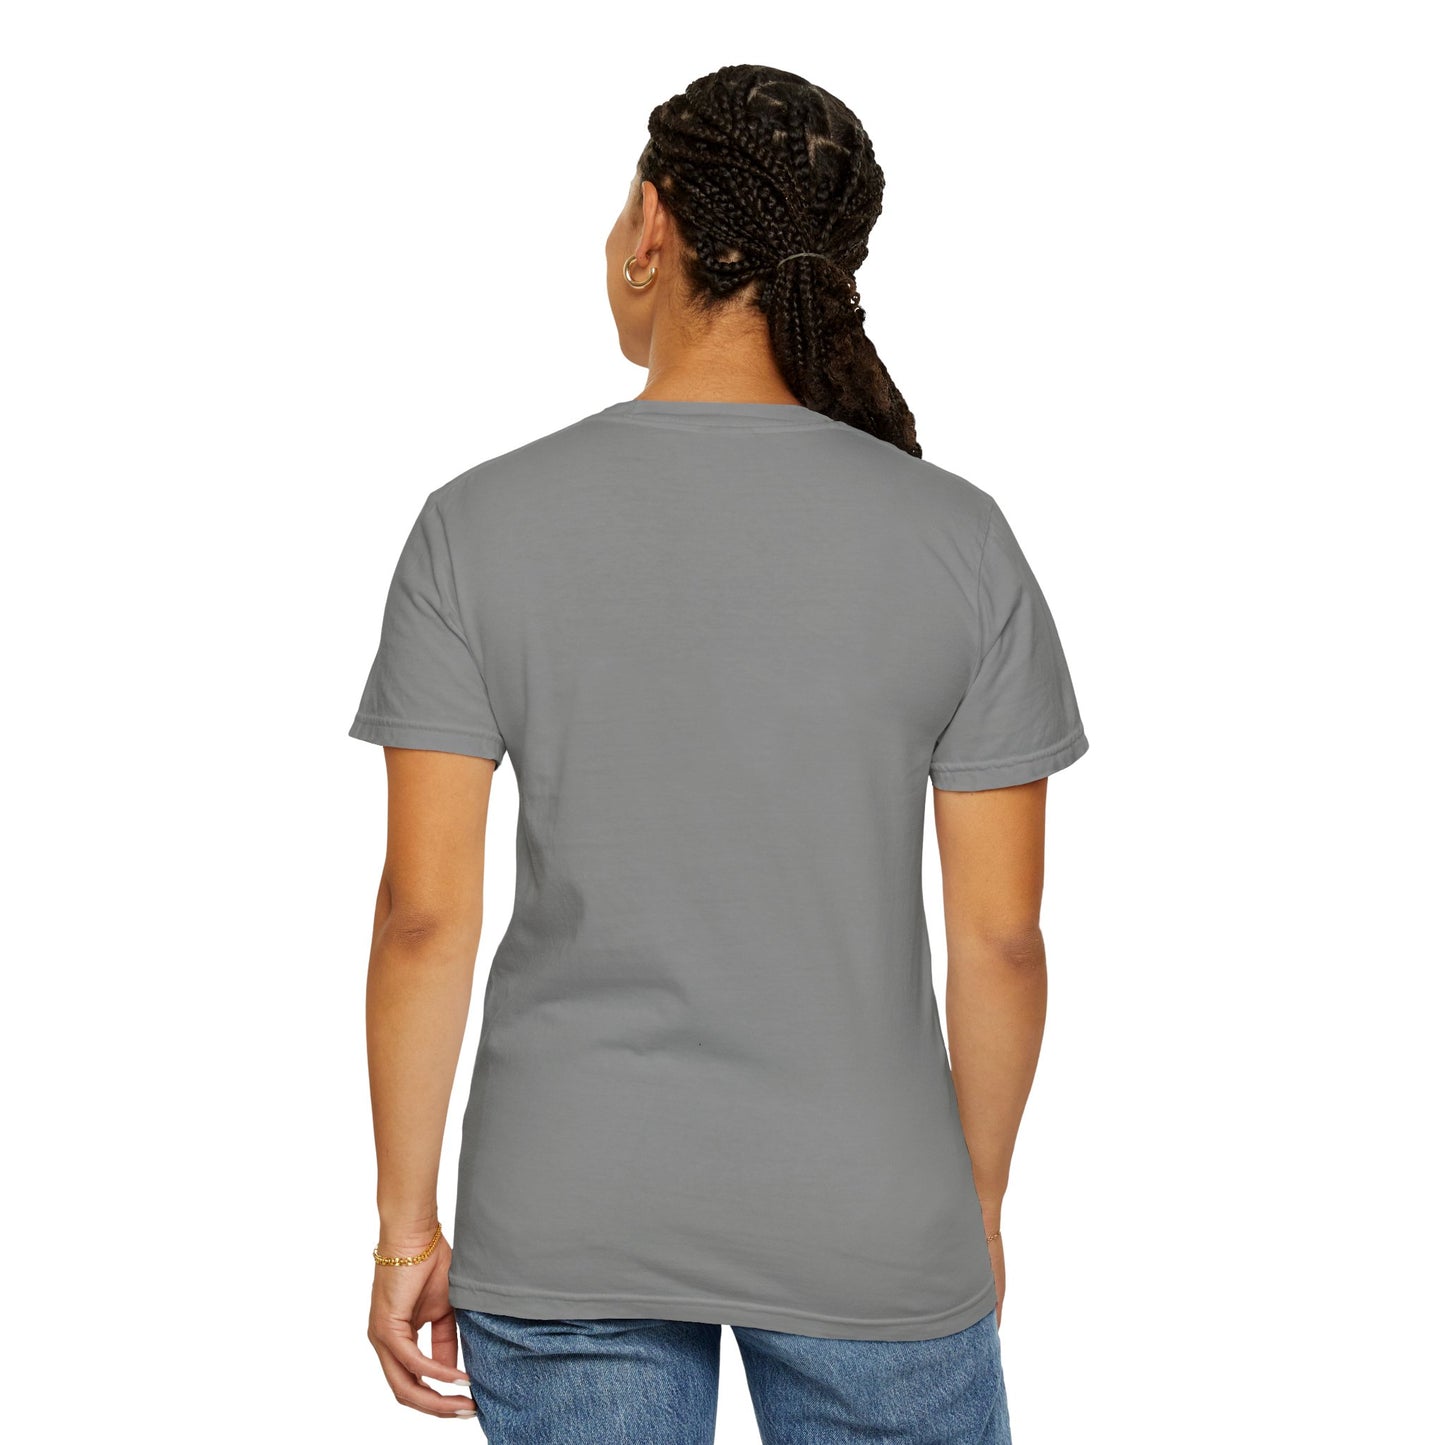 Best mama ever - Unisex Garment-Dyed T-shirt